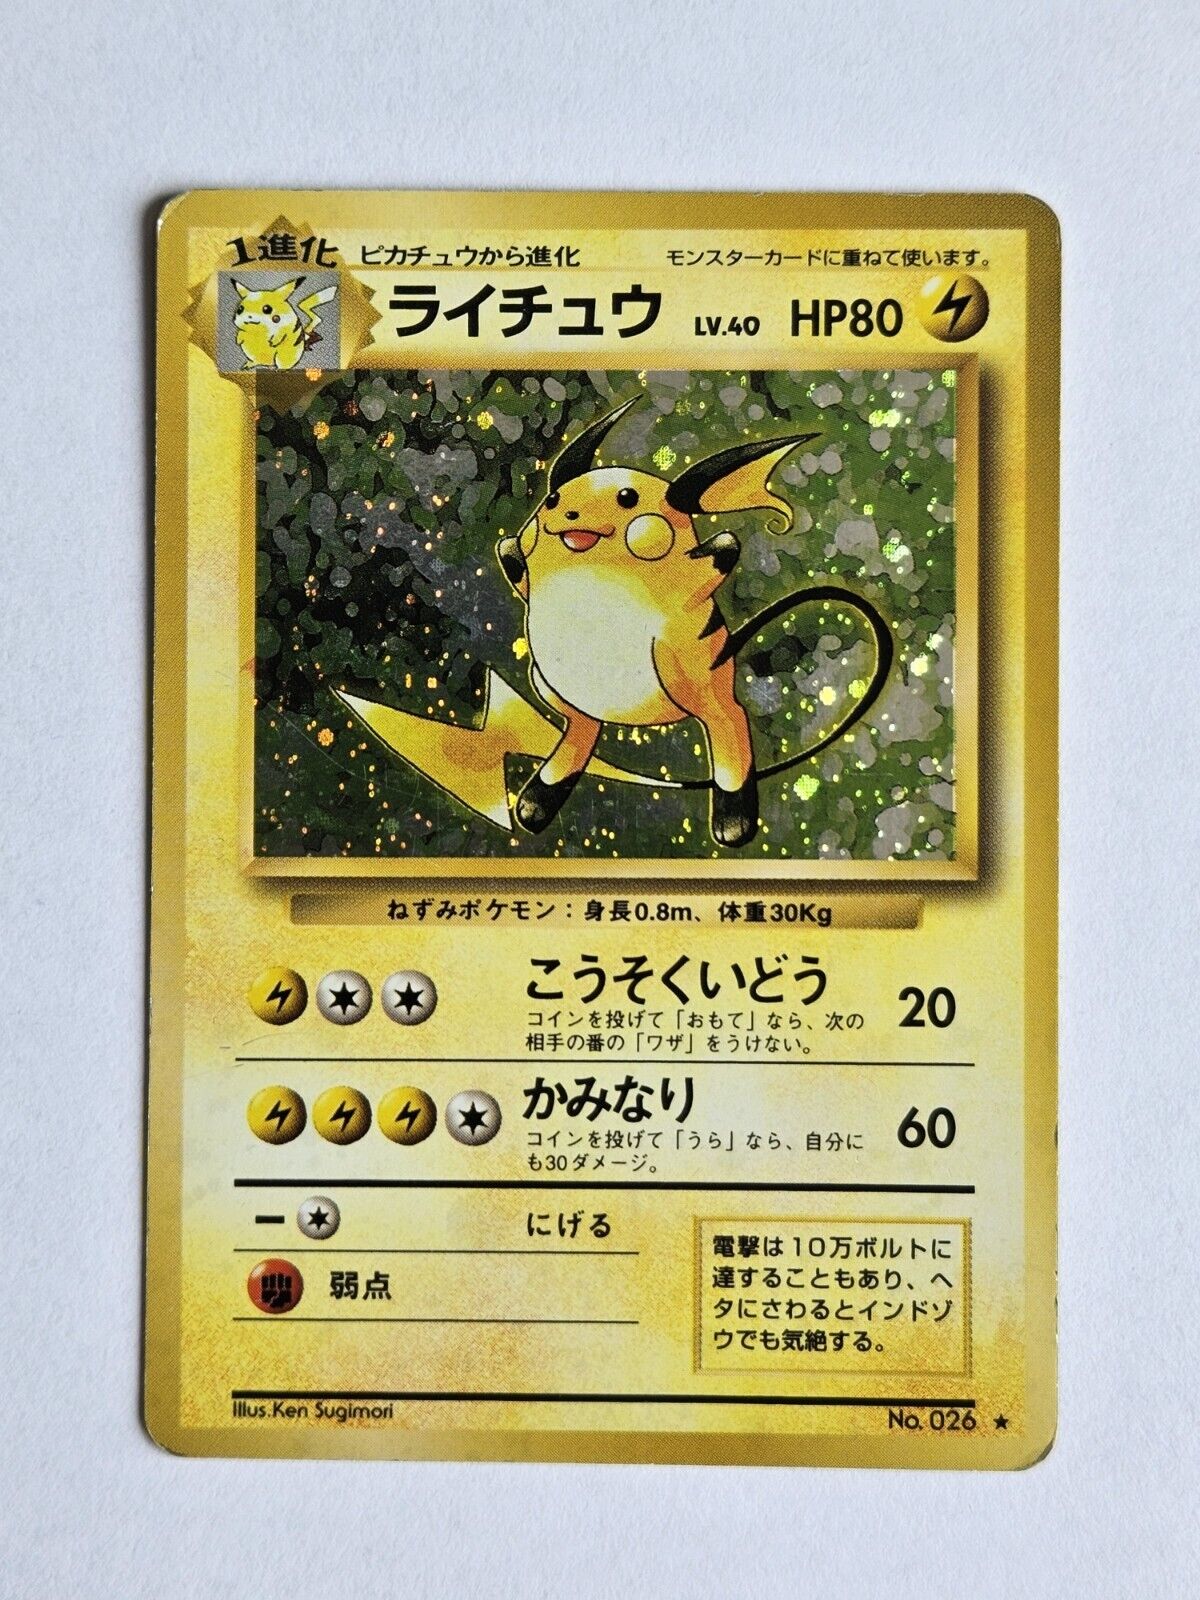 Raichu No.026 Base Set Expansion Japanese Holo Pokemon Card - Light Play